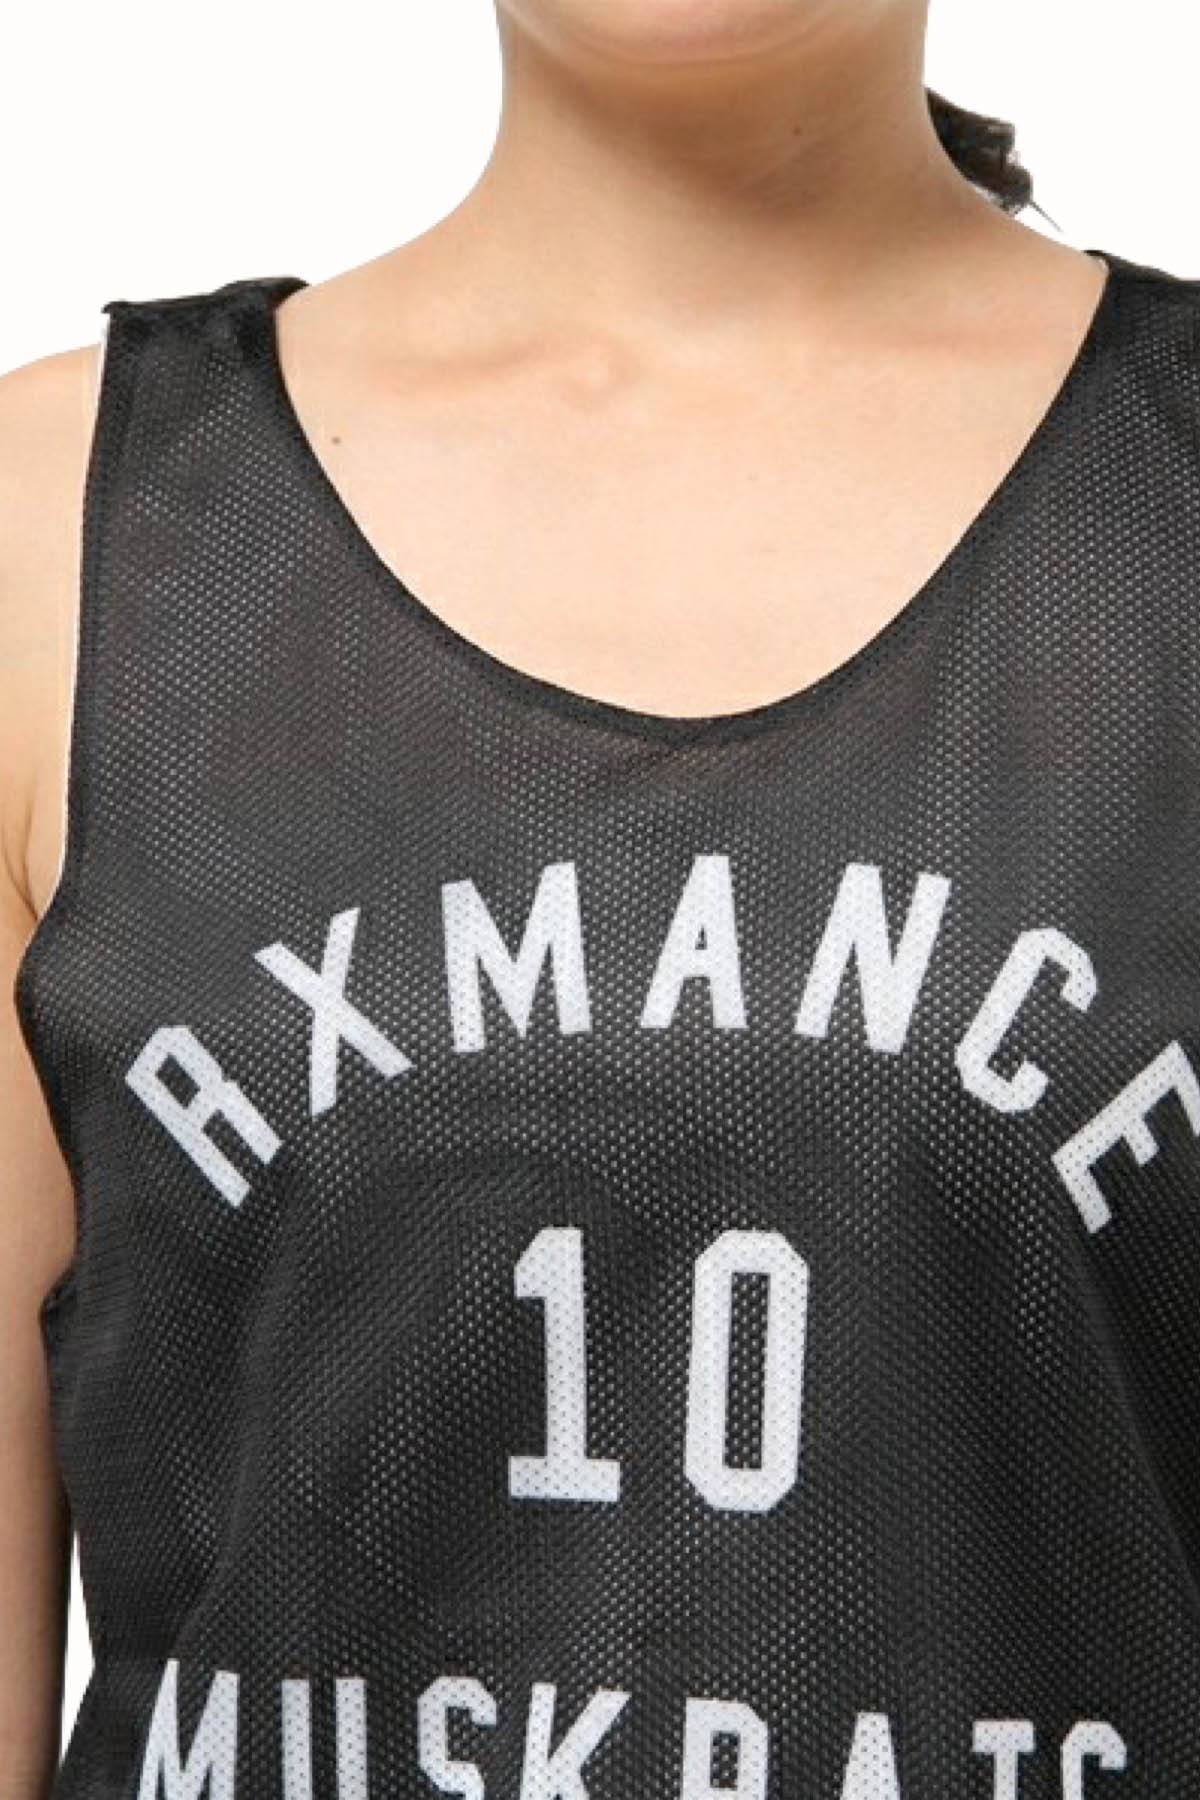 Rxmance Unisex Black Muskrats Basketball Mesh Tank